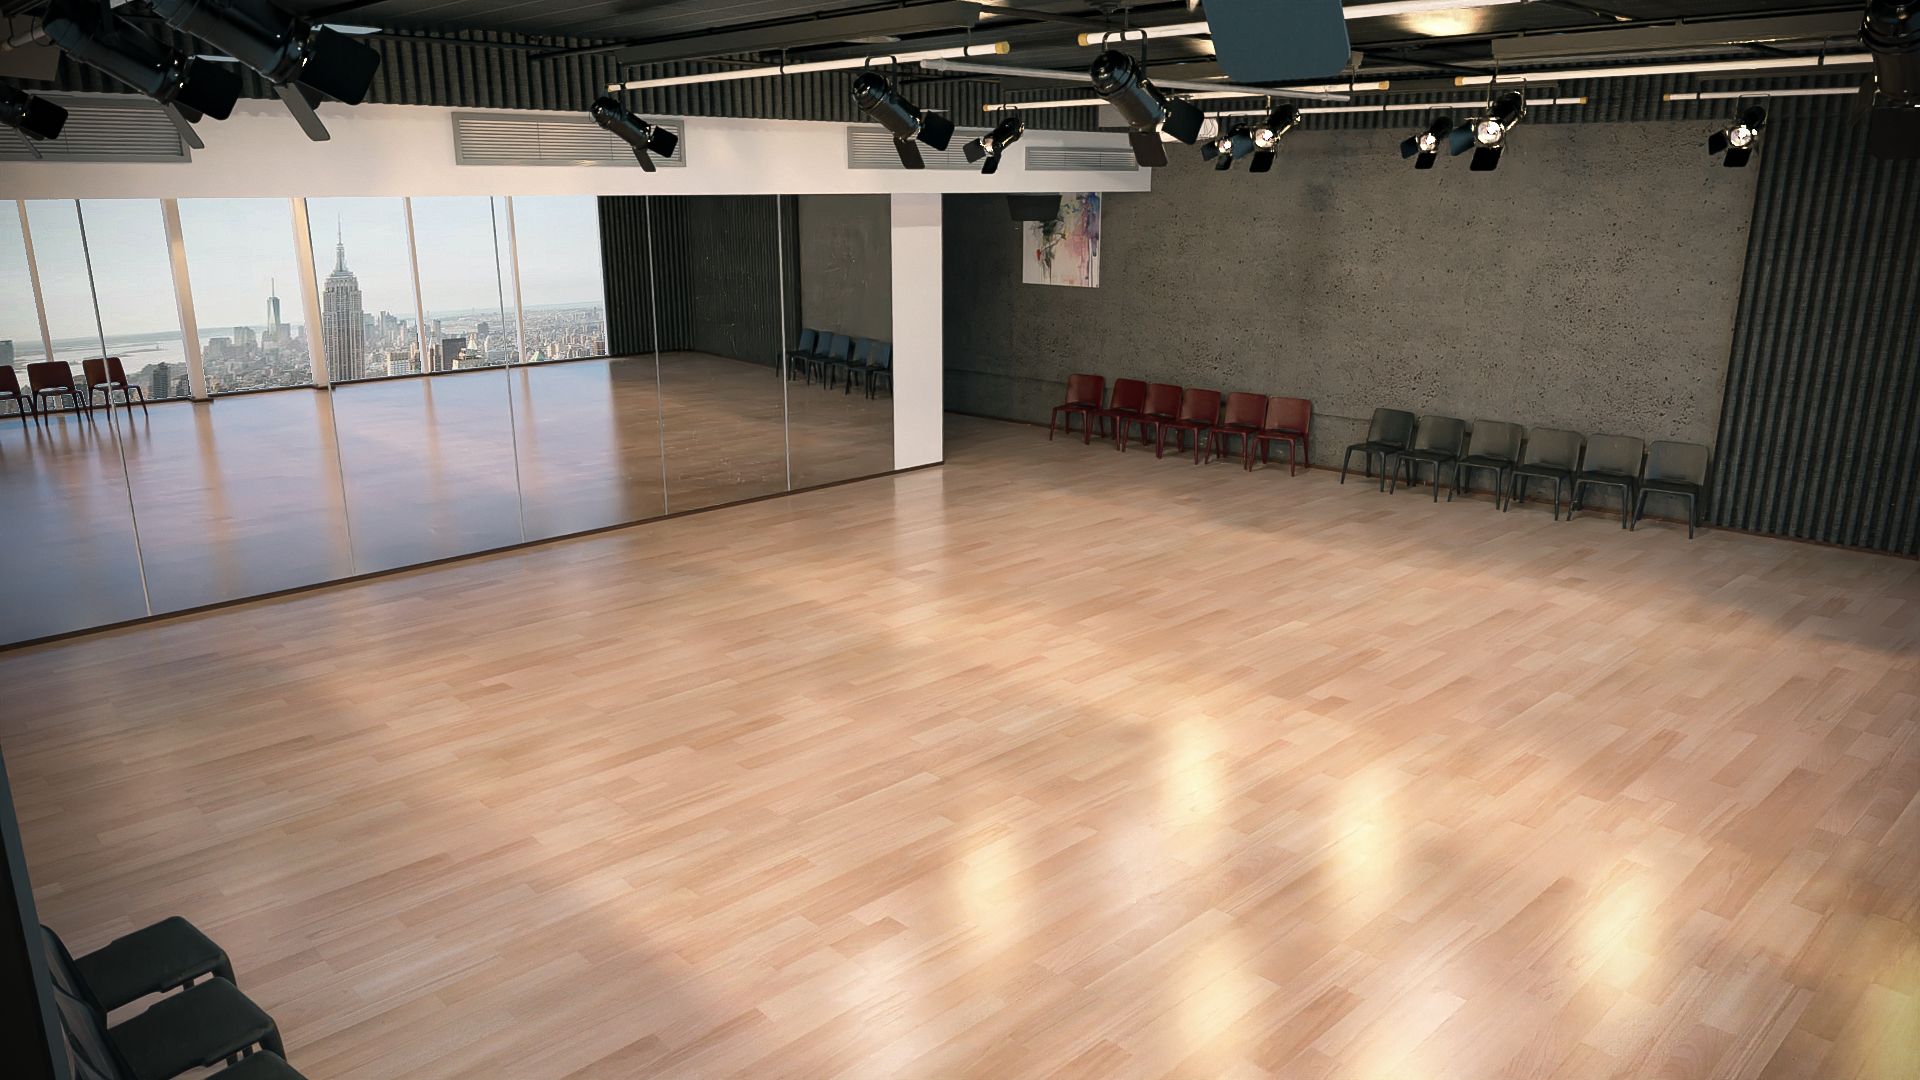 Dance Art Studio by: Tesla3dCorp, 3D Models by Daz 3D